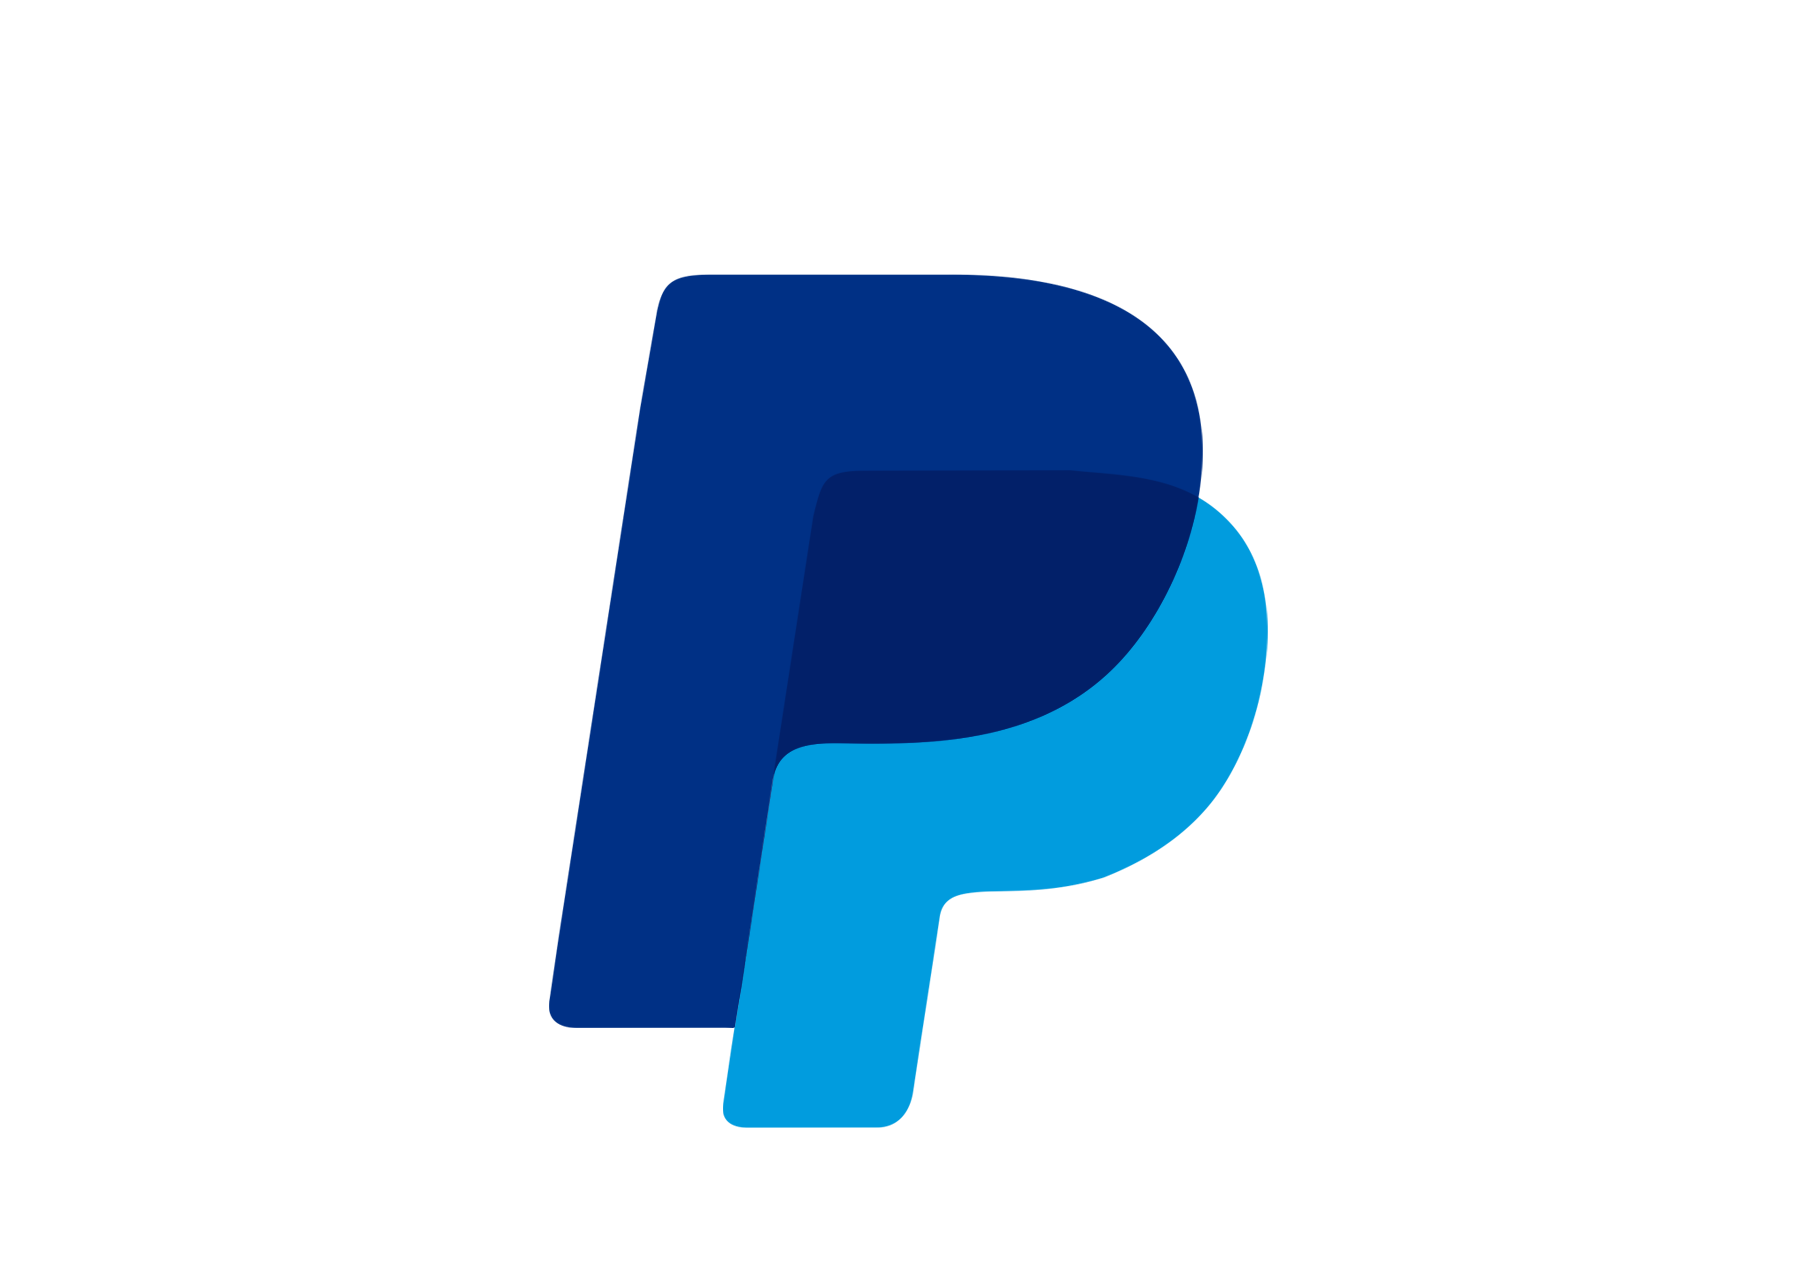 Paypal PNG-PlusPNG.com-1024